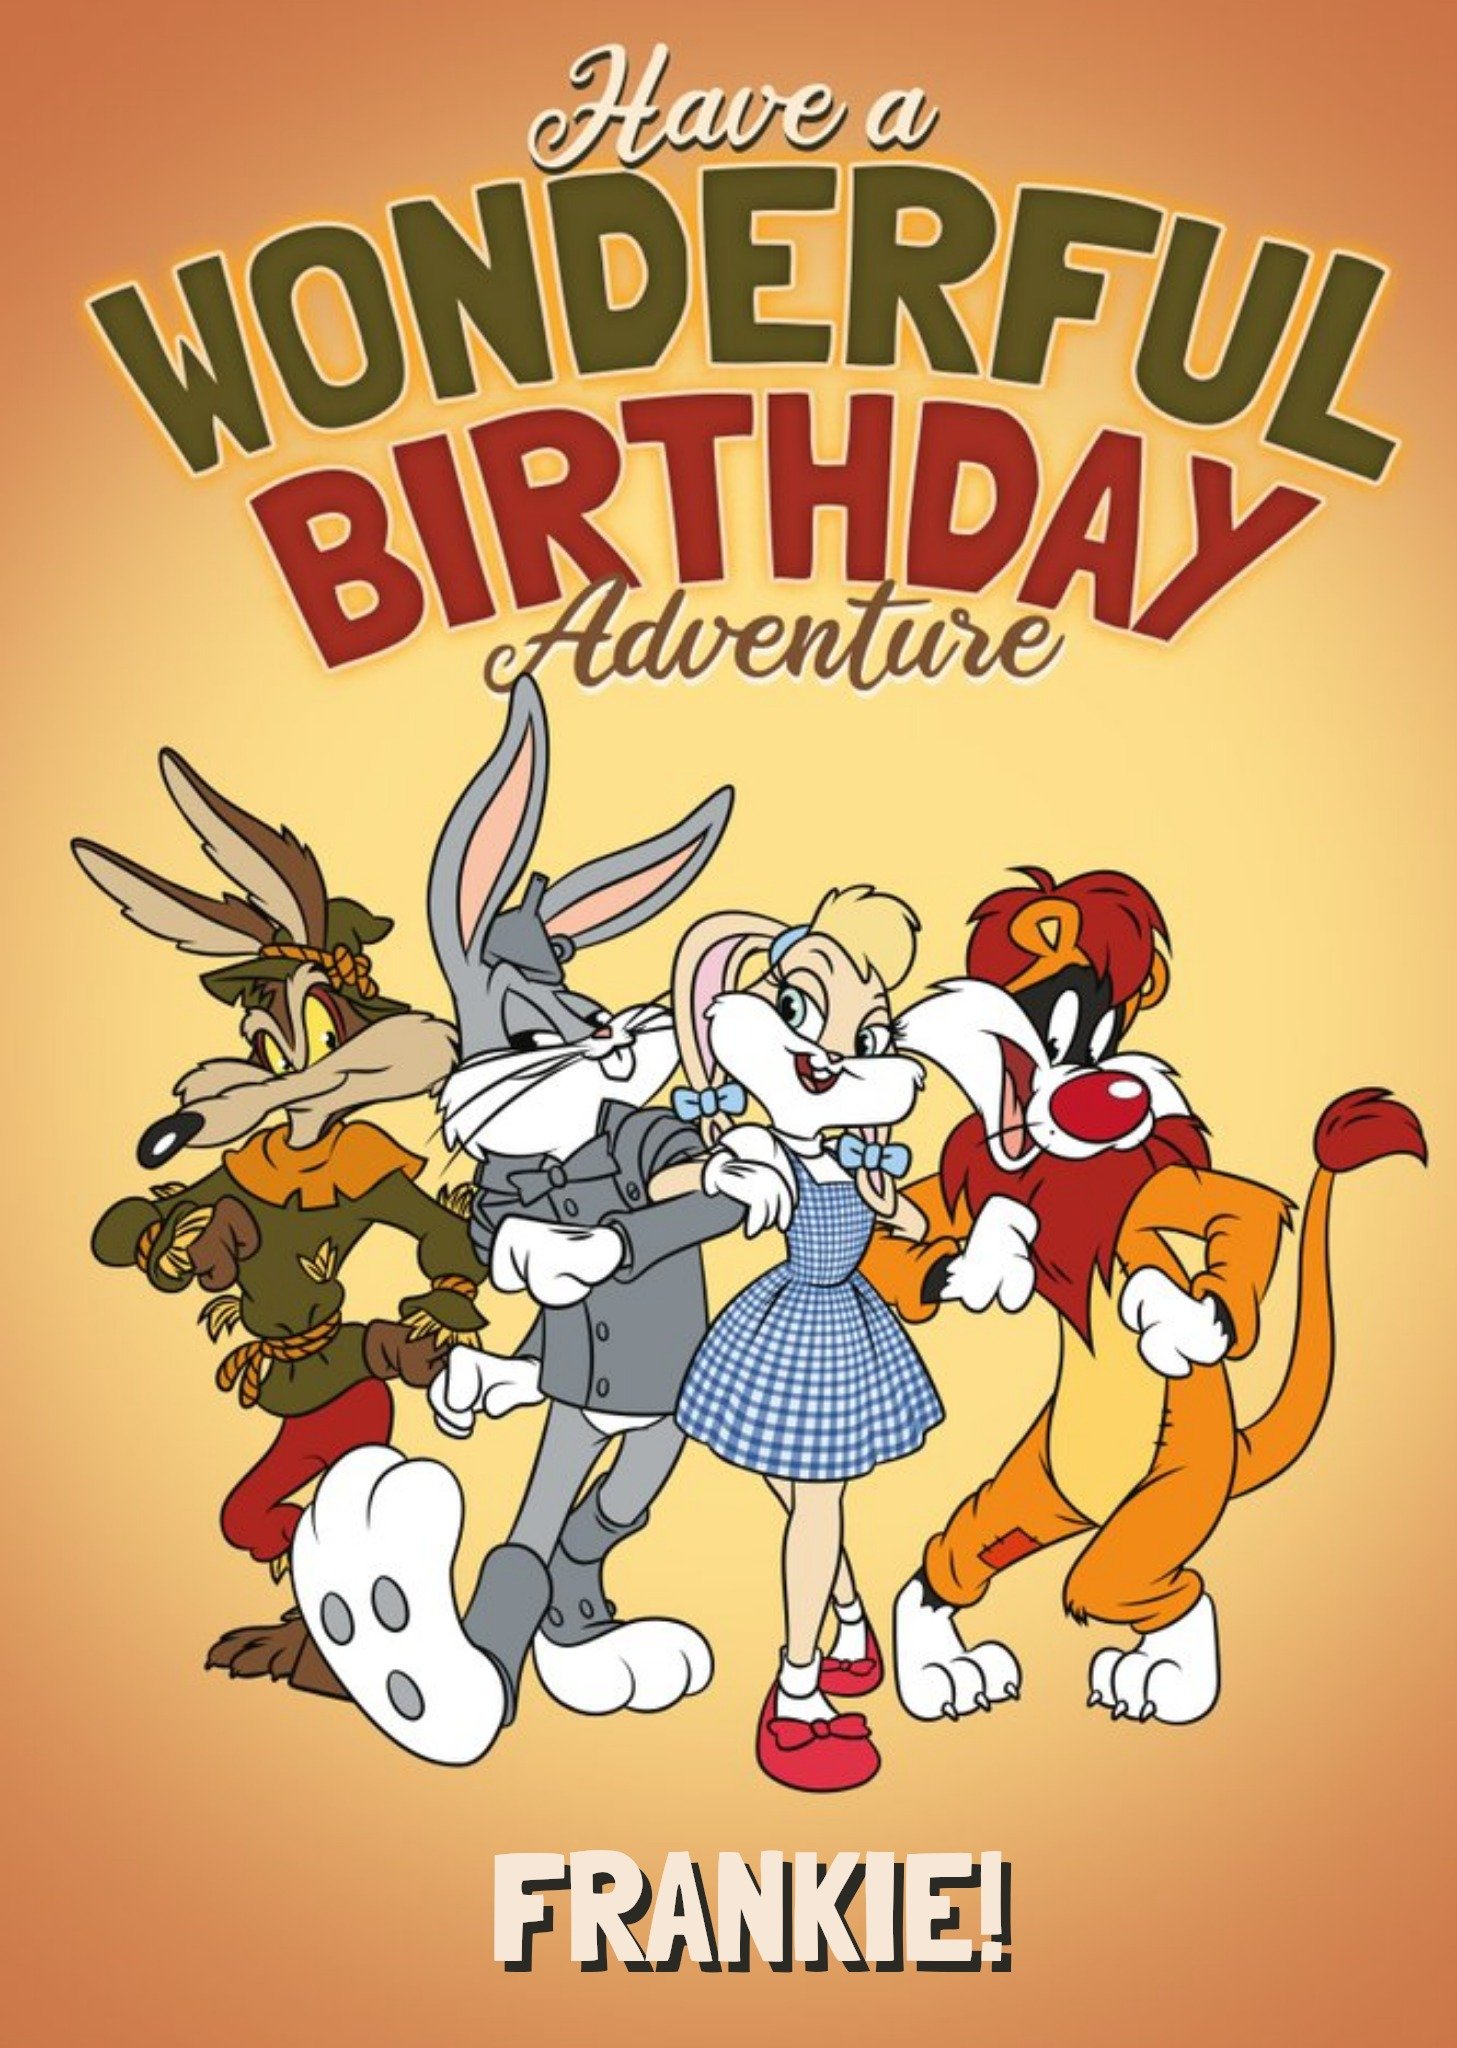 Moonpig Warner Brothers 100 Have Wonderful Birthday Adventure Card, Large